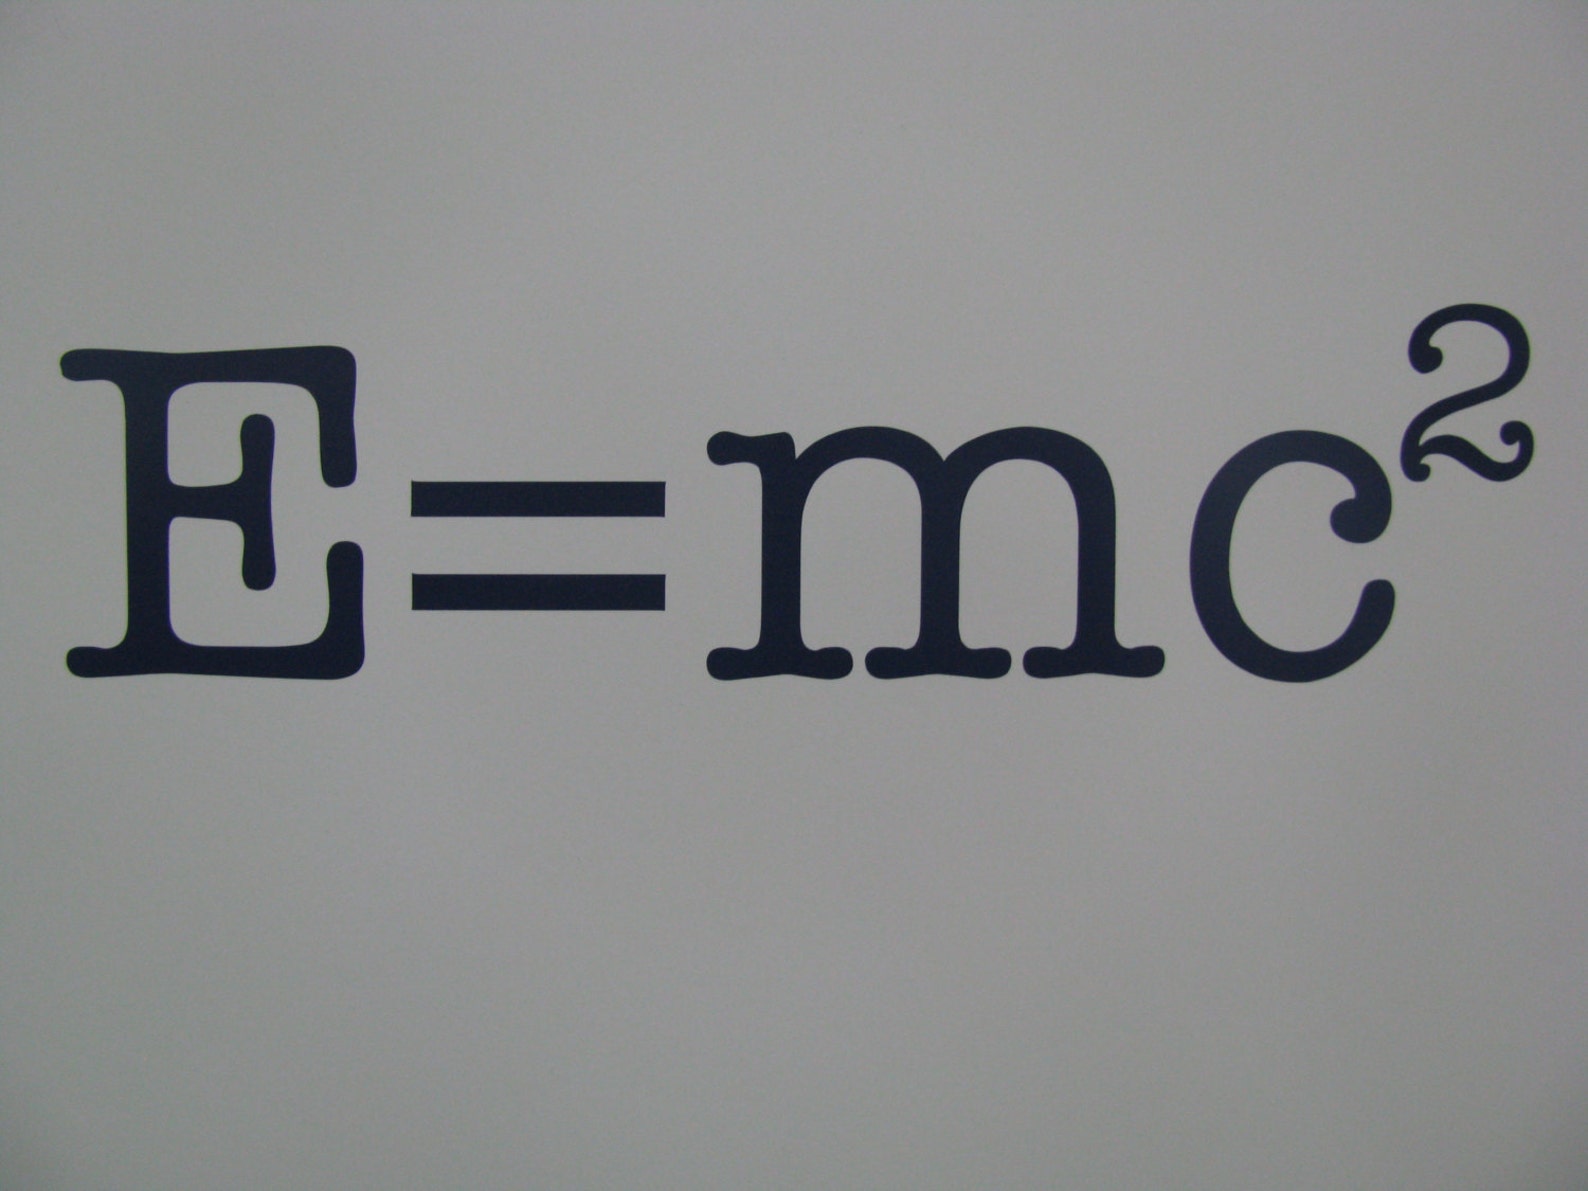 Е равно мс. Формула Эйнштейна e mc2. Формула е мс2. Формула е mc2 расшифровка. Уравнение Эйнштейна е мс2.